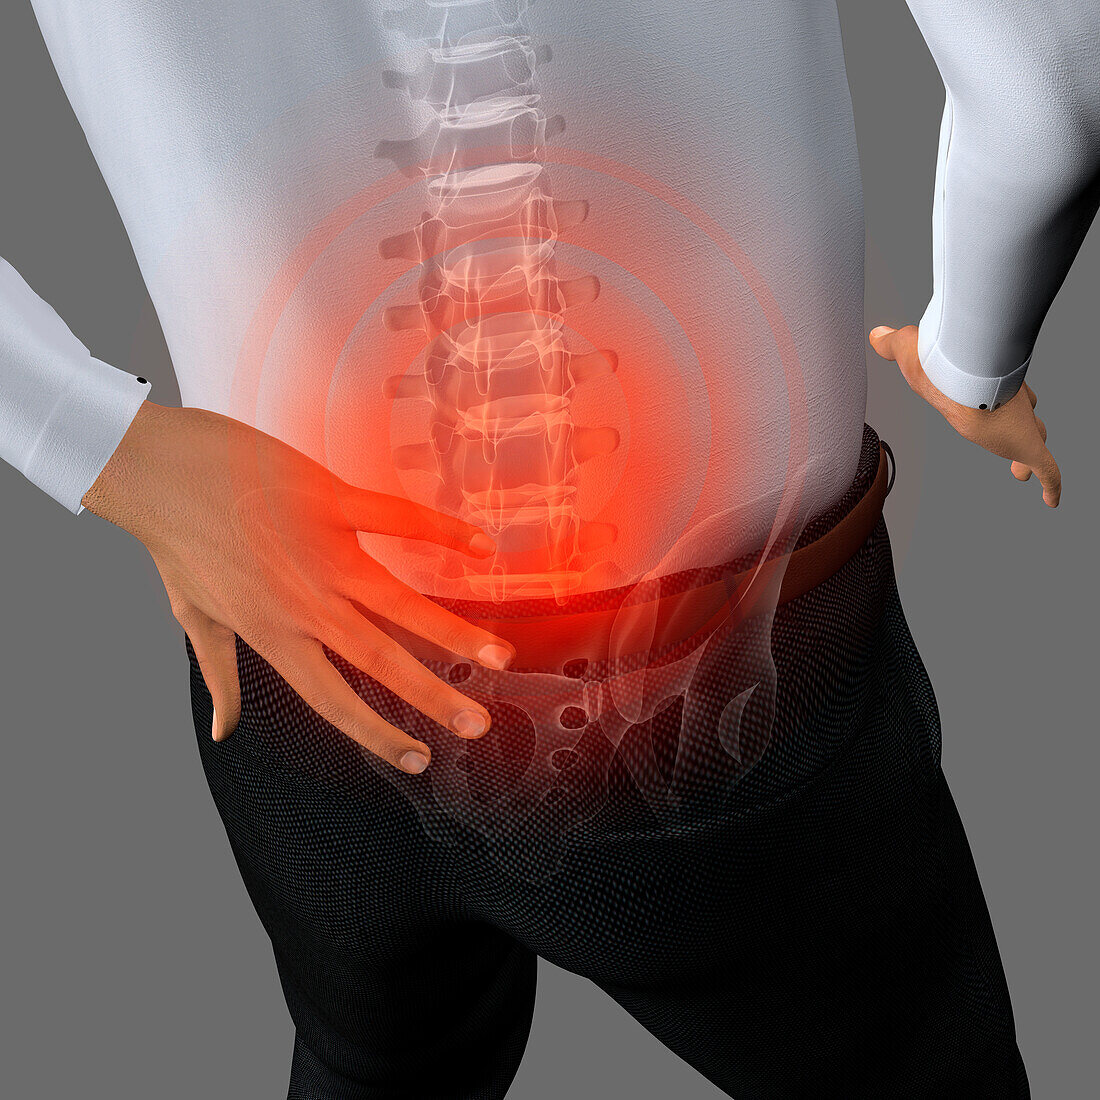 Lower back pain, illustration